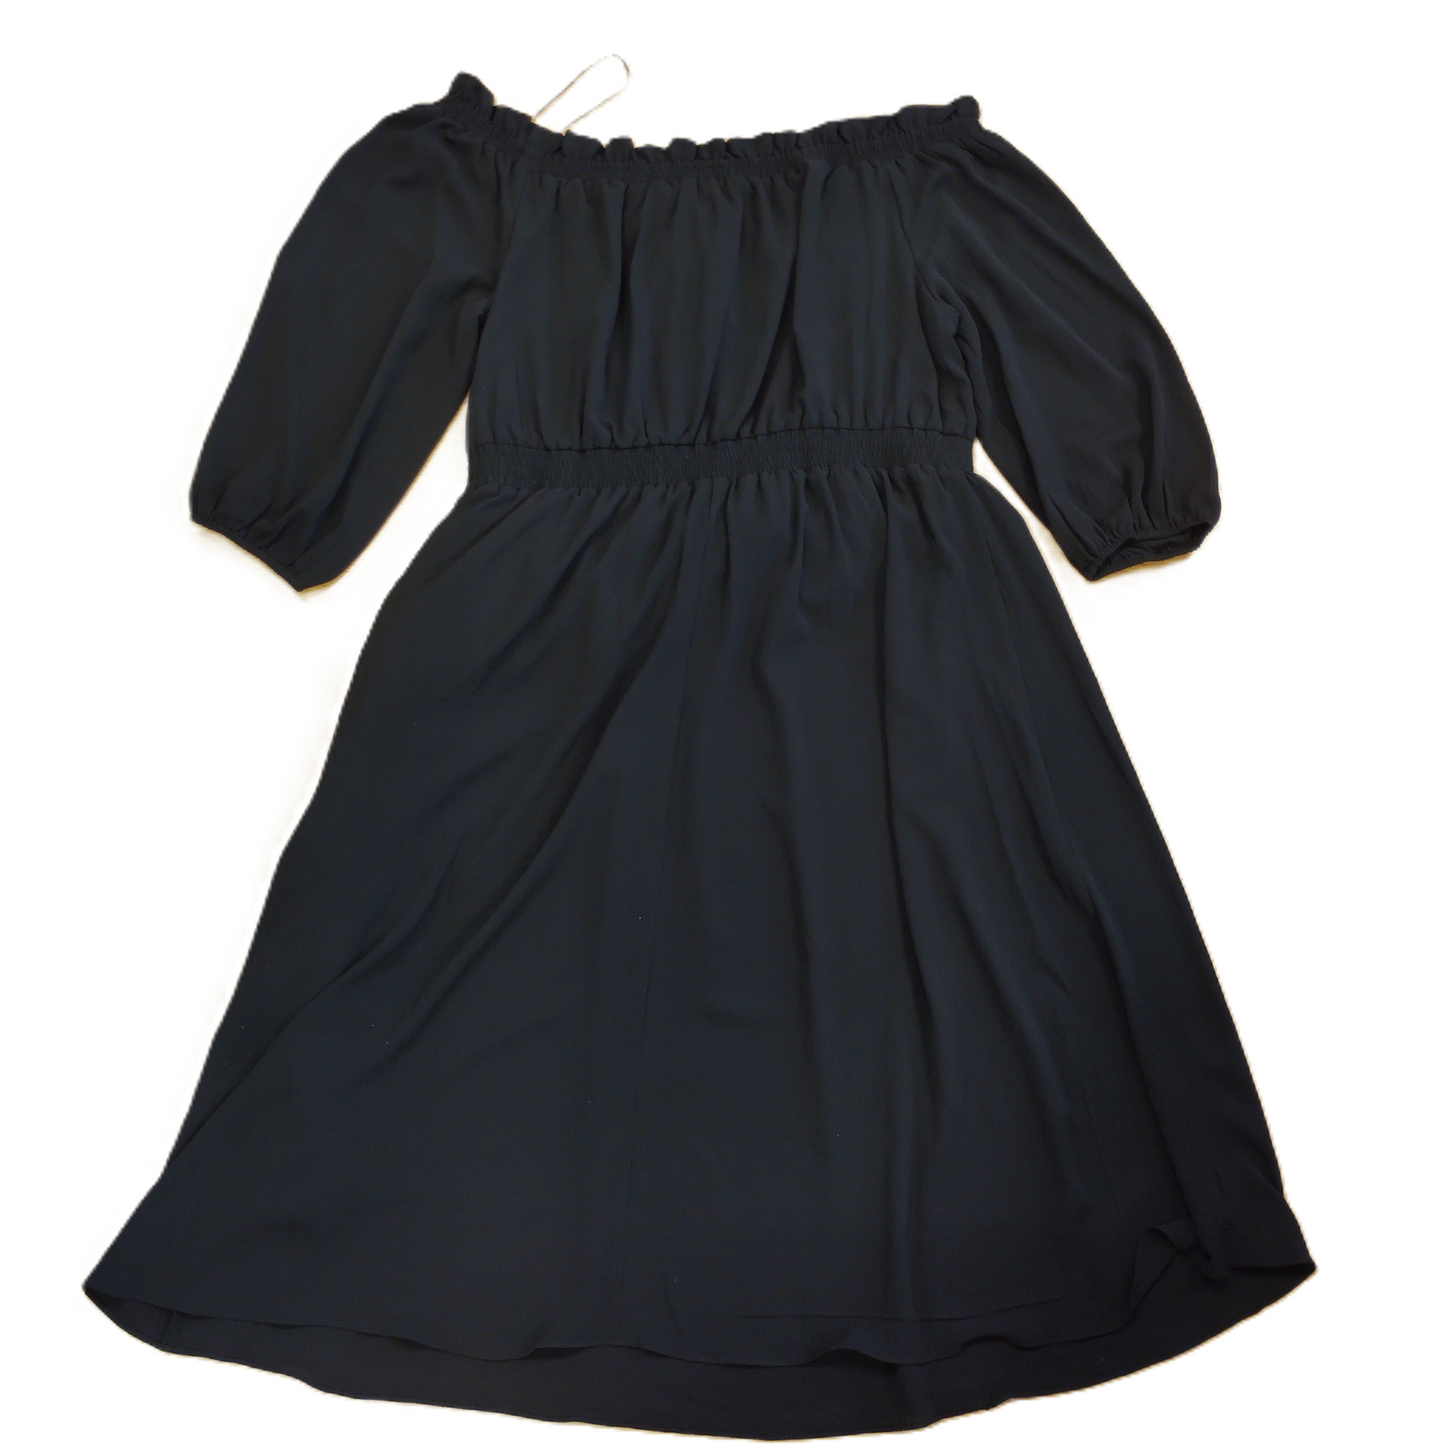 Black Dress Casual Maxi By Lane Bryant, Size: 2x